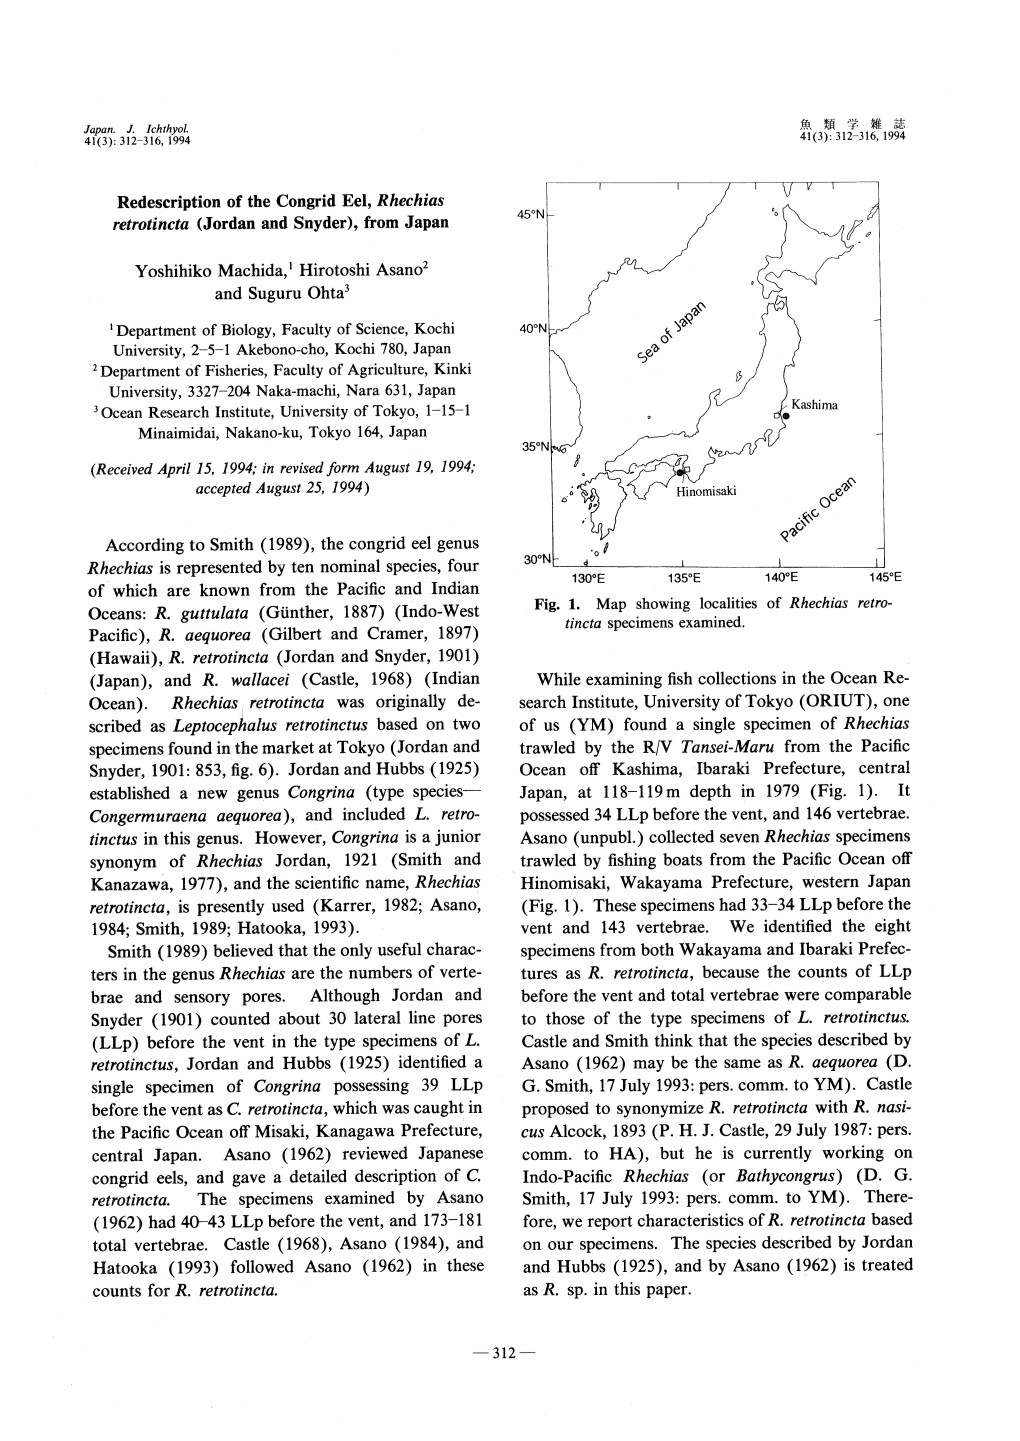 Redescription of the Congrid Eel, Rhechias Retrotincta (Jordan and Snyder), from Japan